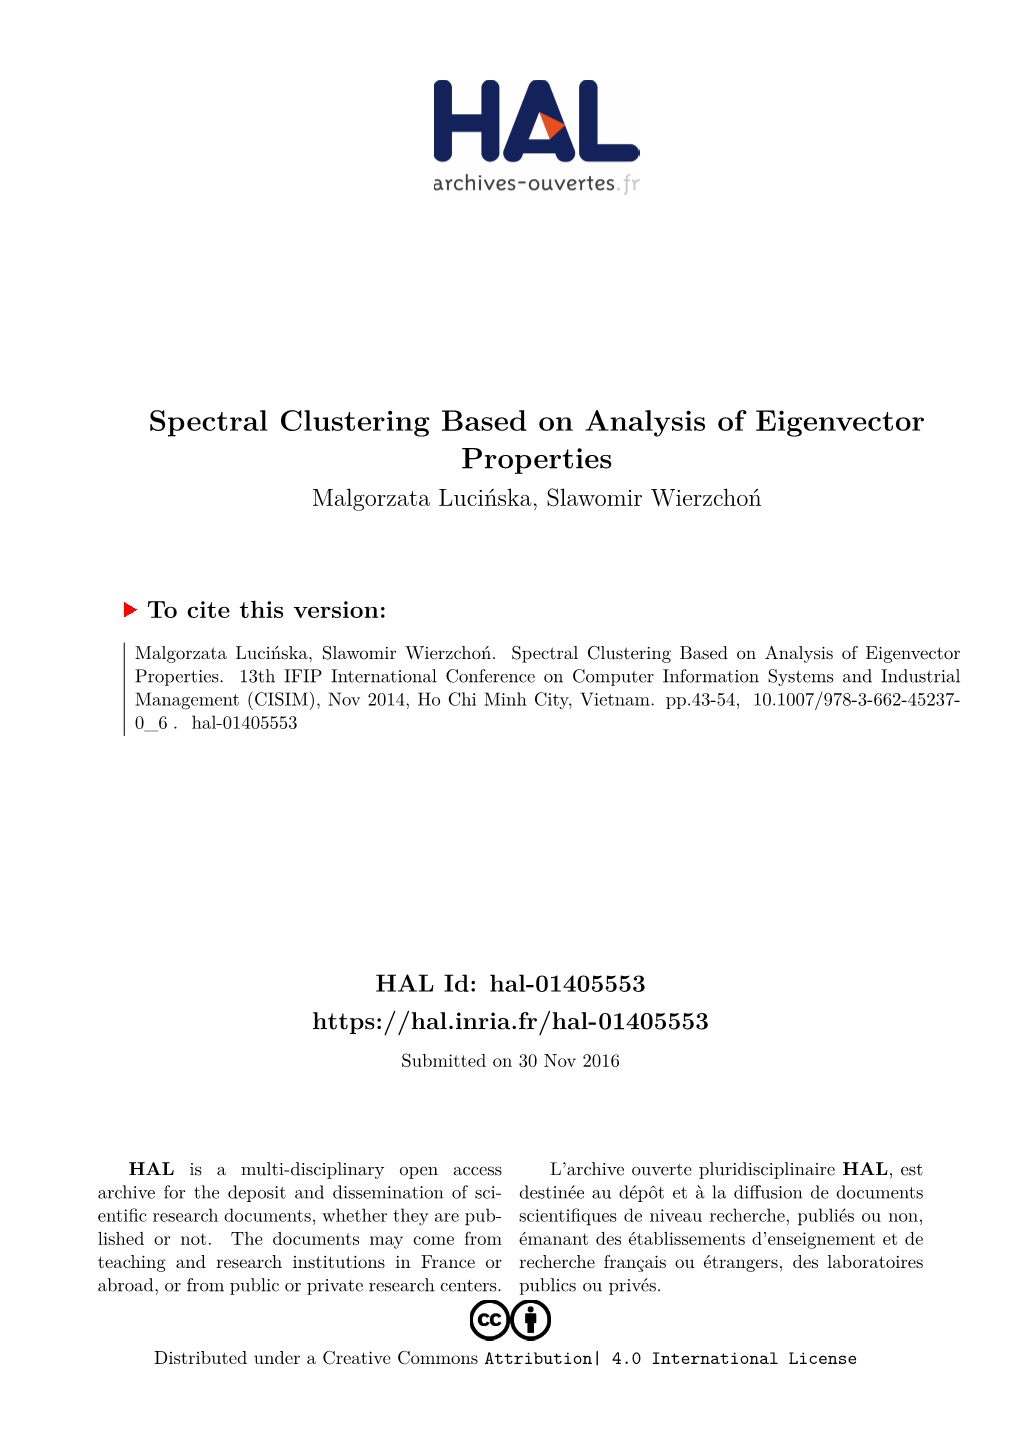 Spectral Clustering Based on Analysis of Eigenvector Properties Malgorzata Lucińska, Slawomir Wierzchoń